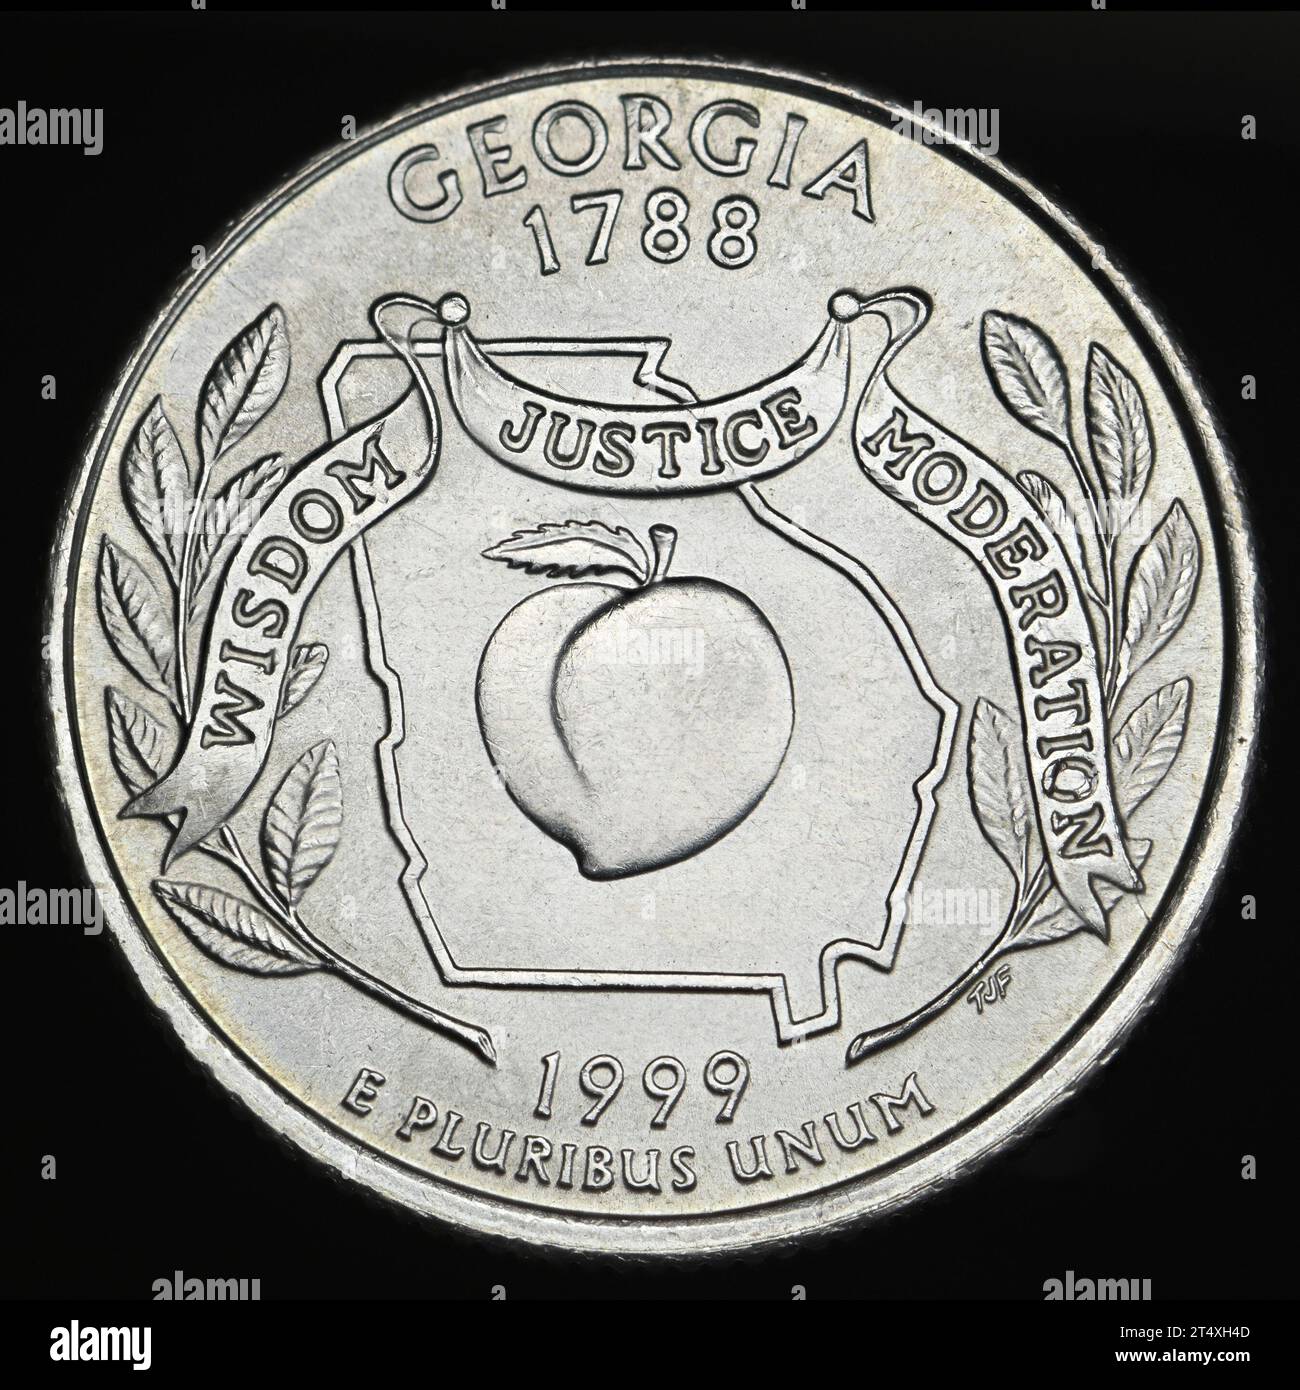 US Commemorative State Quarter Dollar : Georgia (1788) Stock Photo